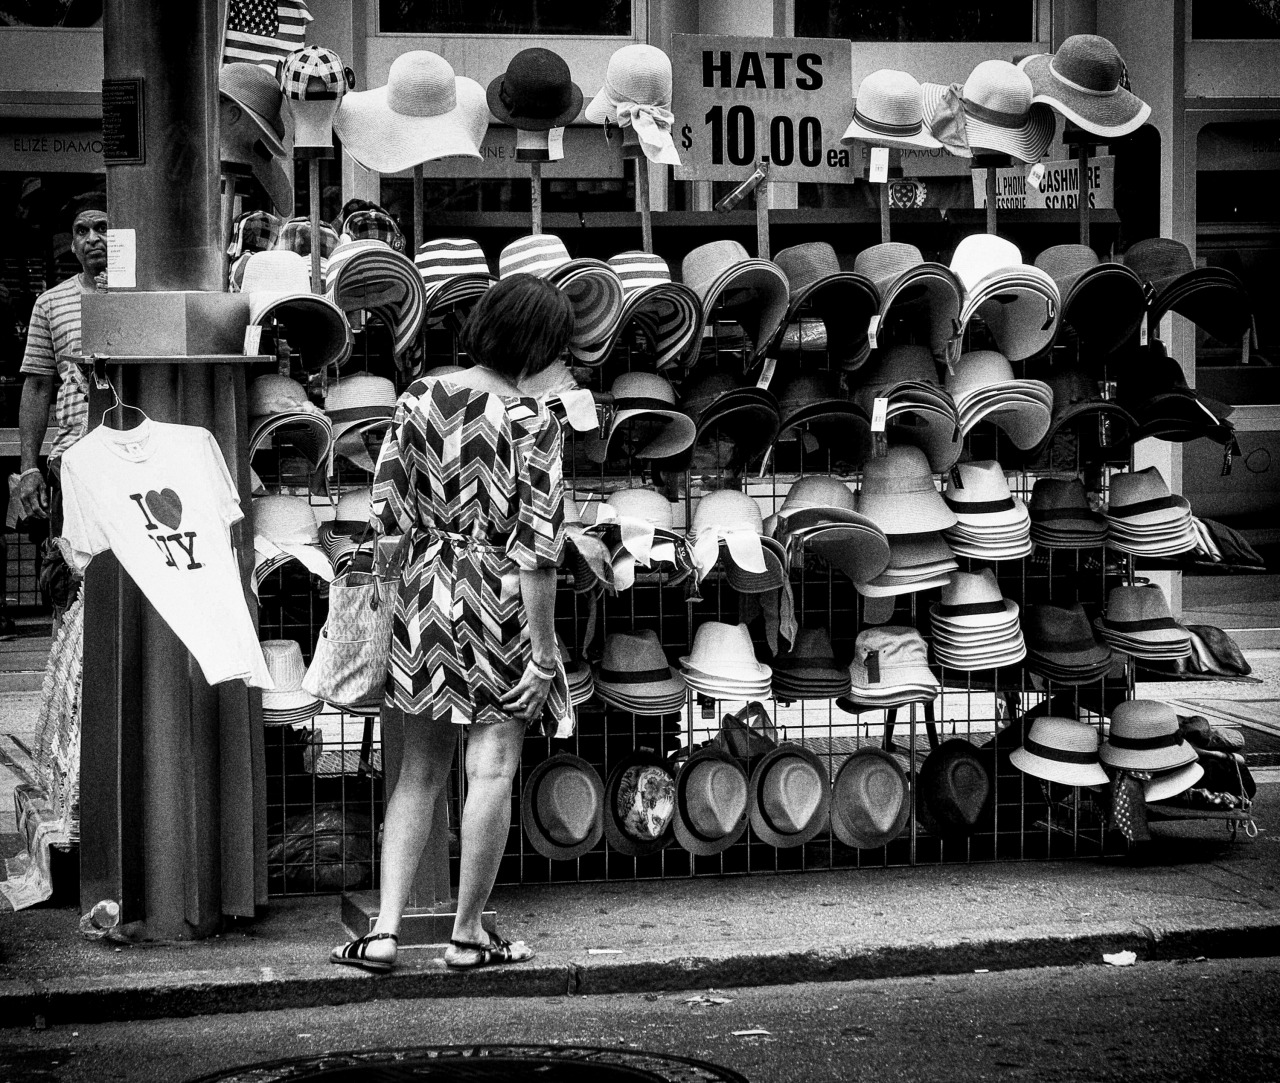 New York CityPhoto: Dieter Krehbiel #hats#photography #Black and White #street market#source:forthepleasureofmylife#Dieter Krehbiel#urban #photographers on tumblr  #Green Eyes 55  #New York City  #black and white photography #new york#manhattan#source: forthepleasureofmylife#2010s#urban life#Street Photography